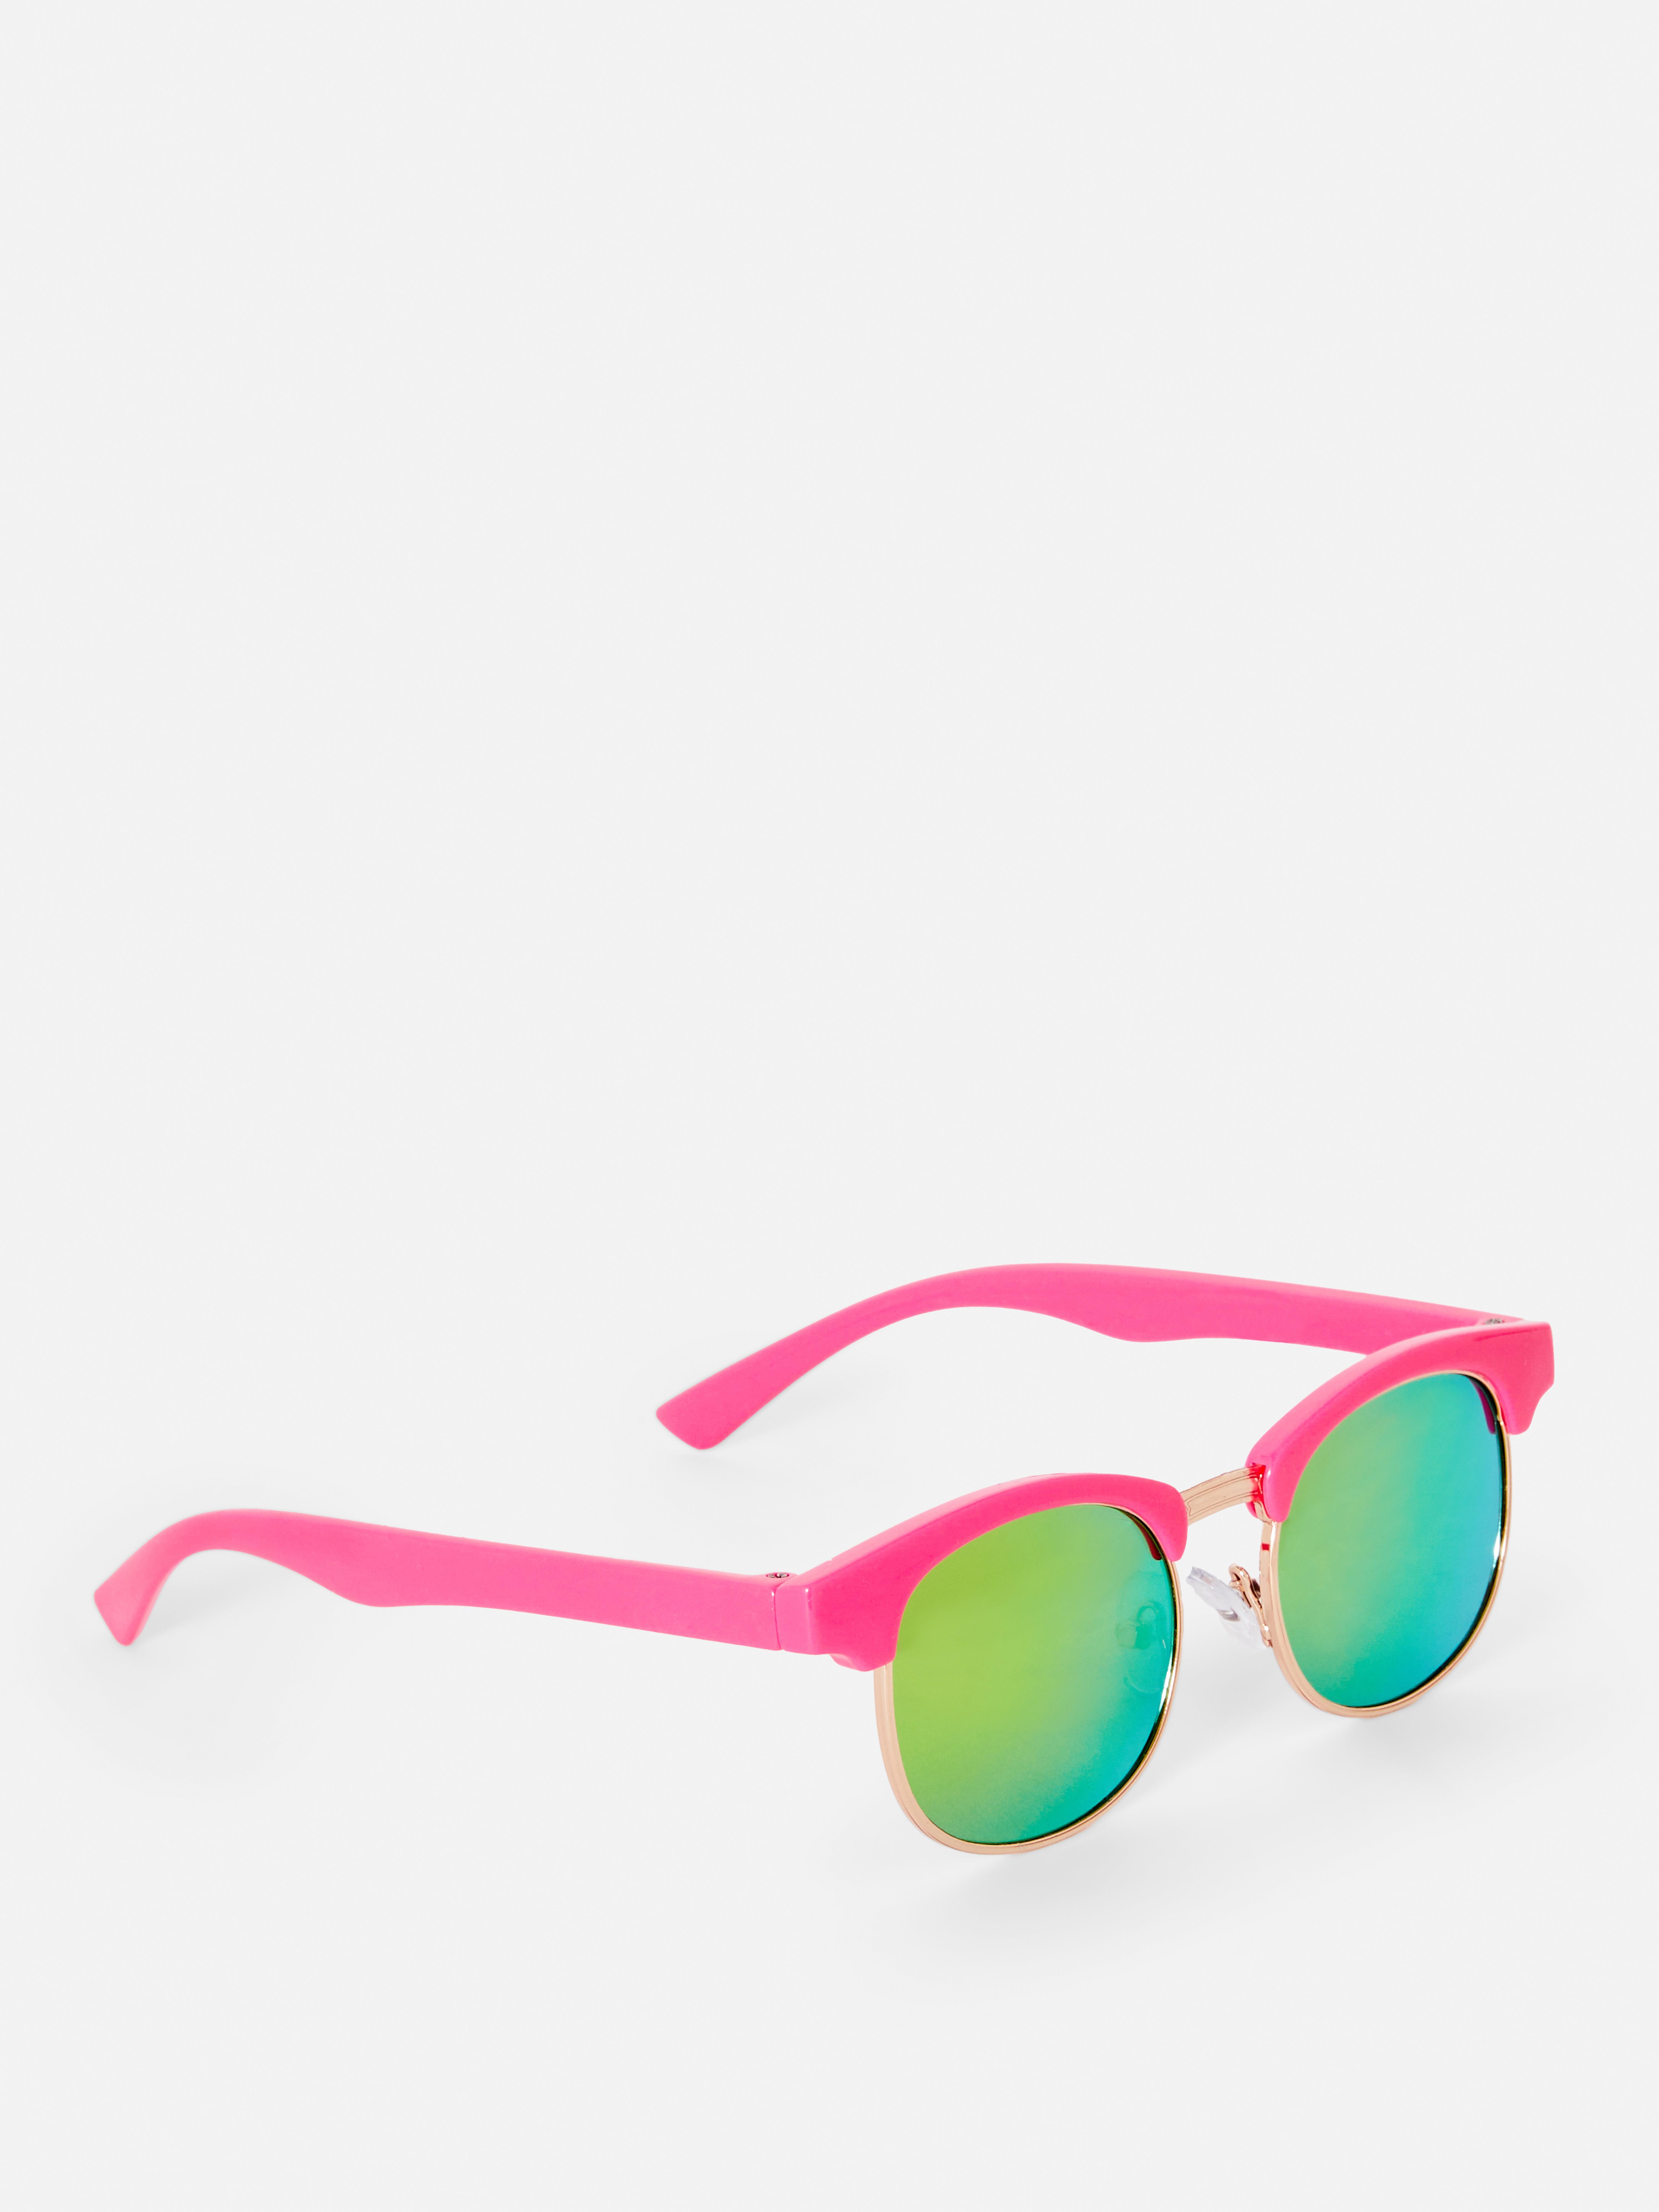 Tinted Block Color Sunglasses